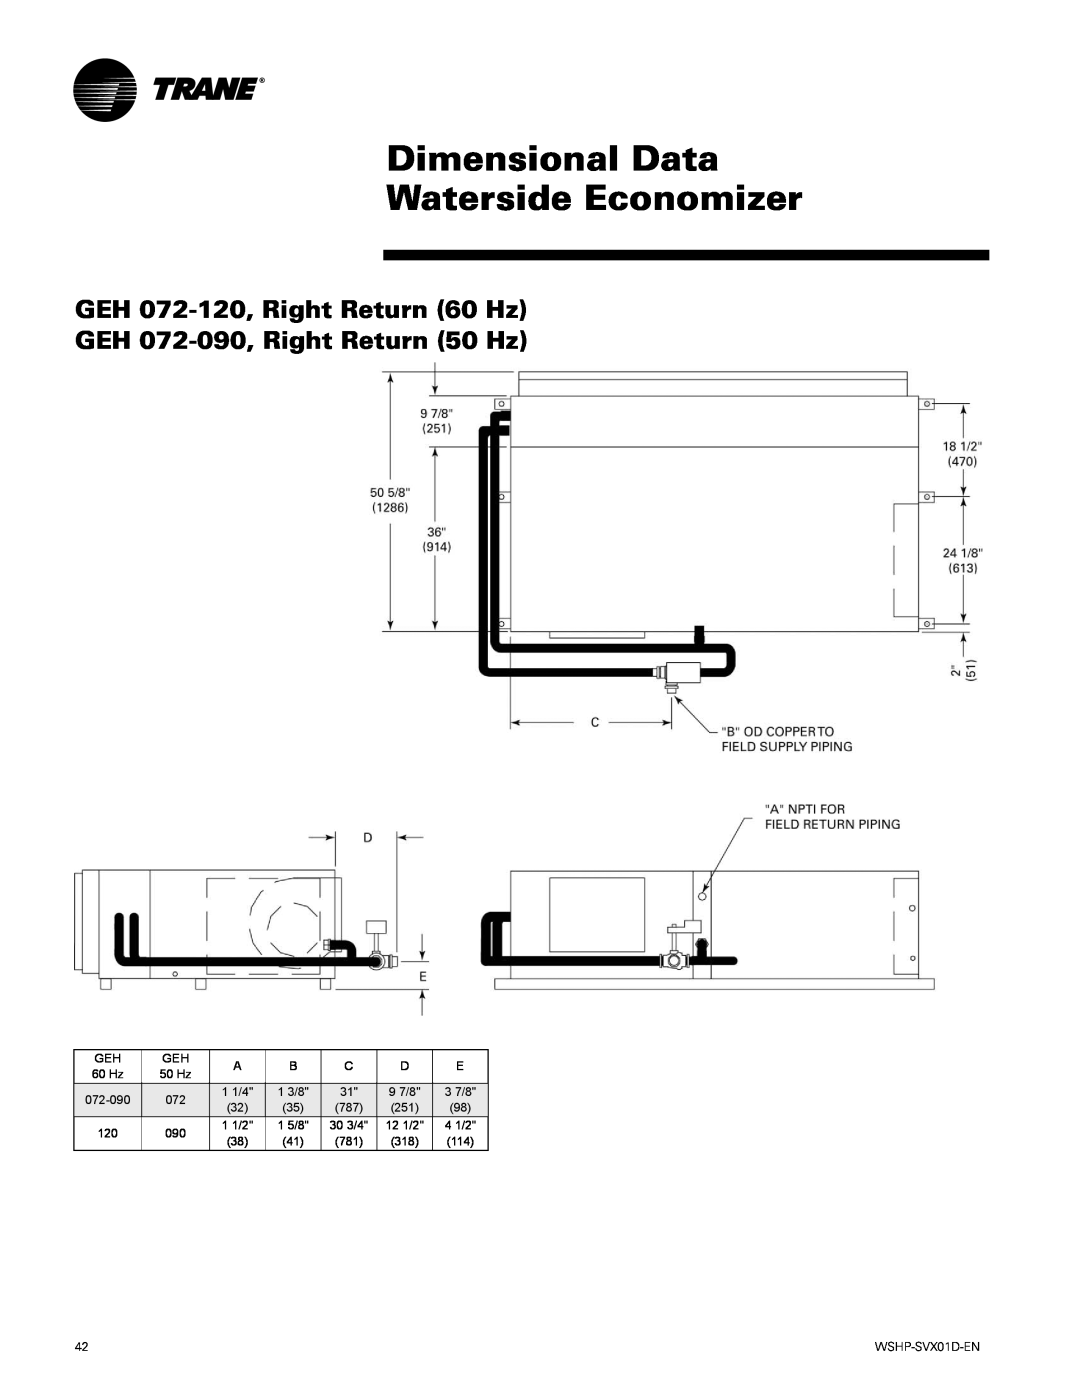 Trane GEV manual Dimensional Data Waterside Economizer, GEH 072-120,Right Return 60 Hz, GEH 072-090,Right Return 50 Hz 